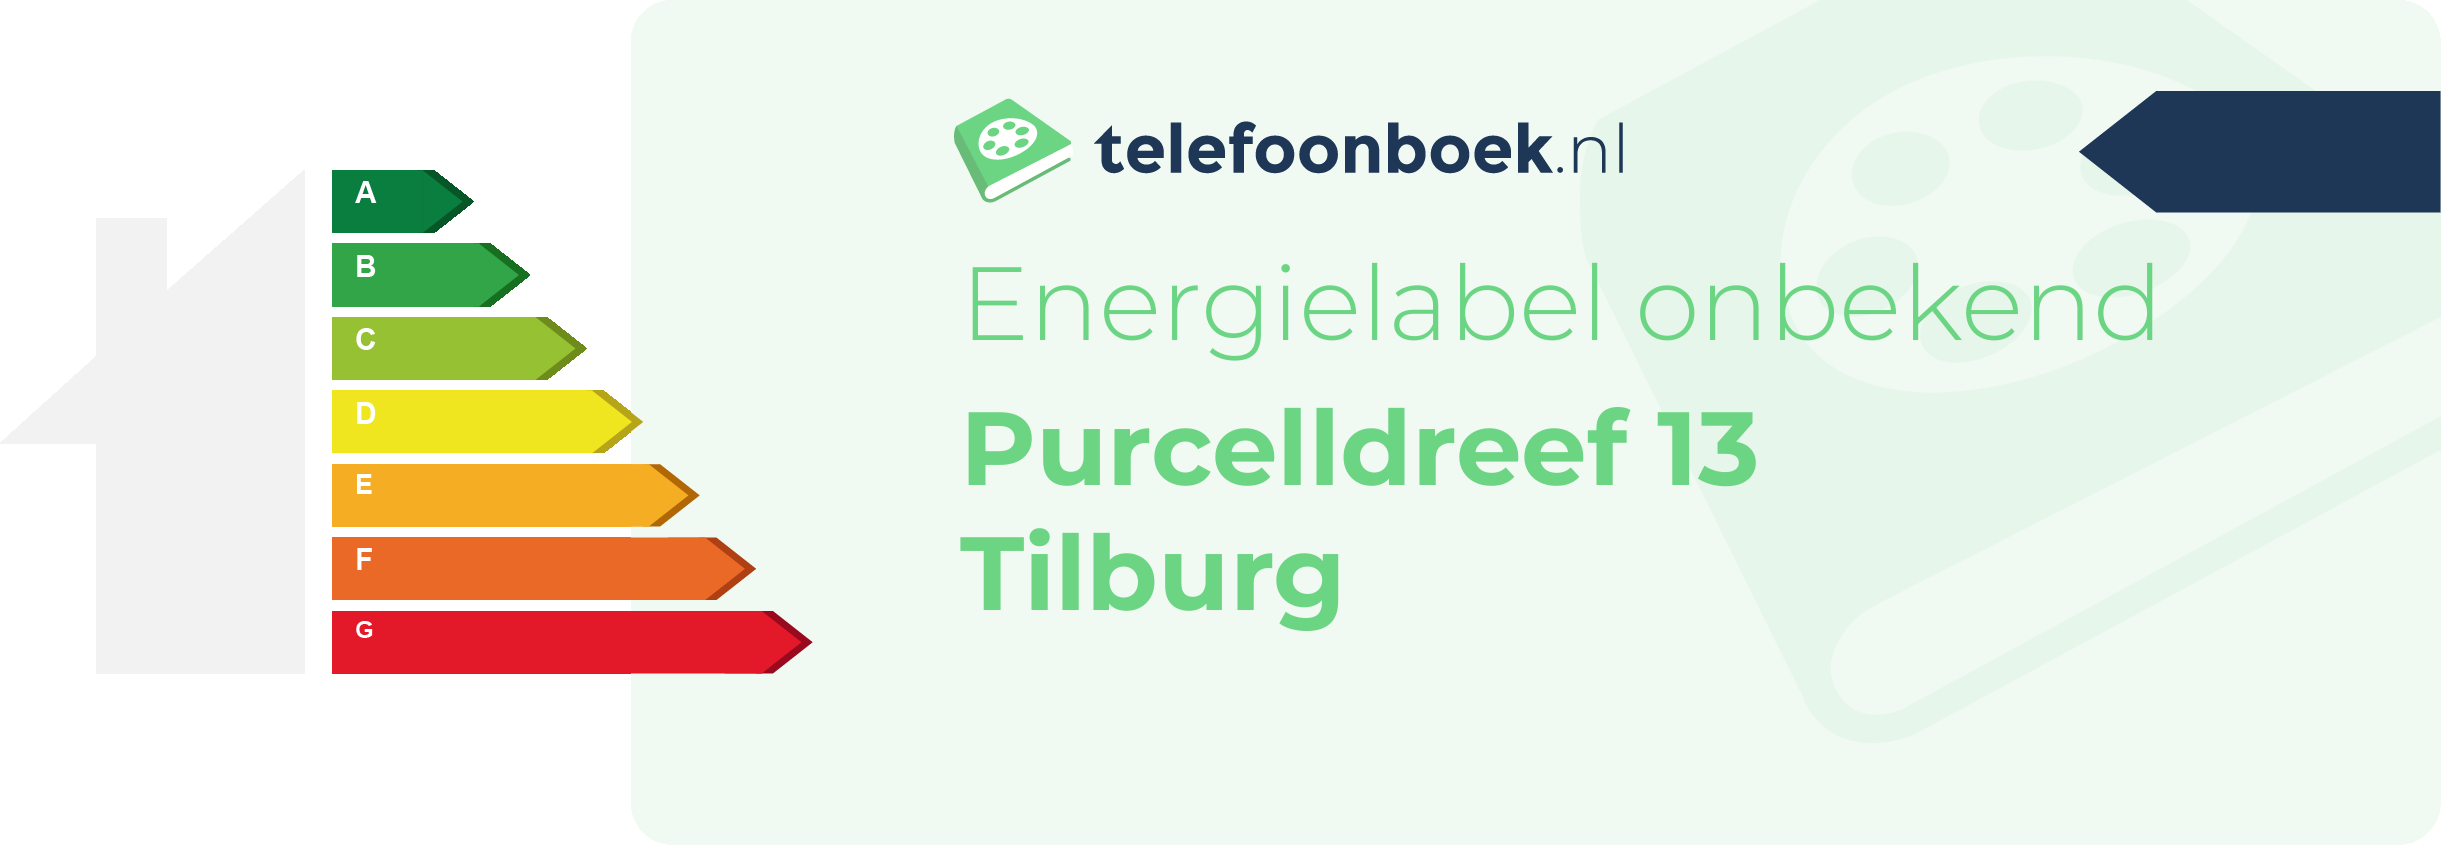 Energielabel Purcelldreef 13 Tilburg